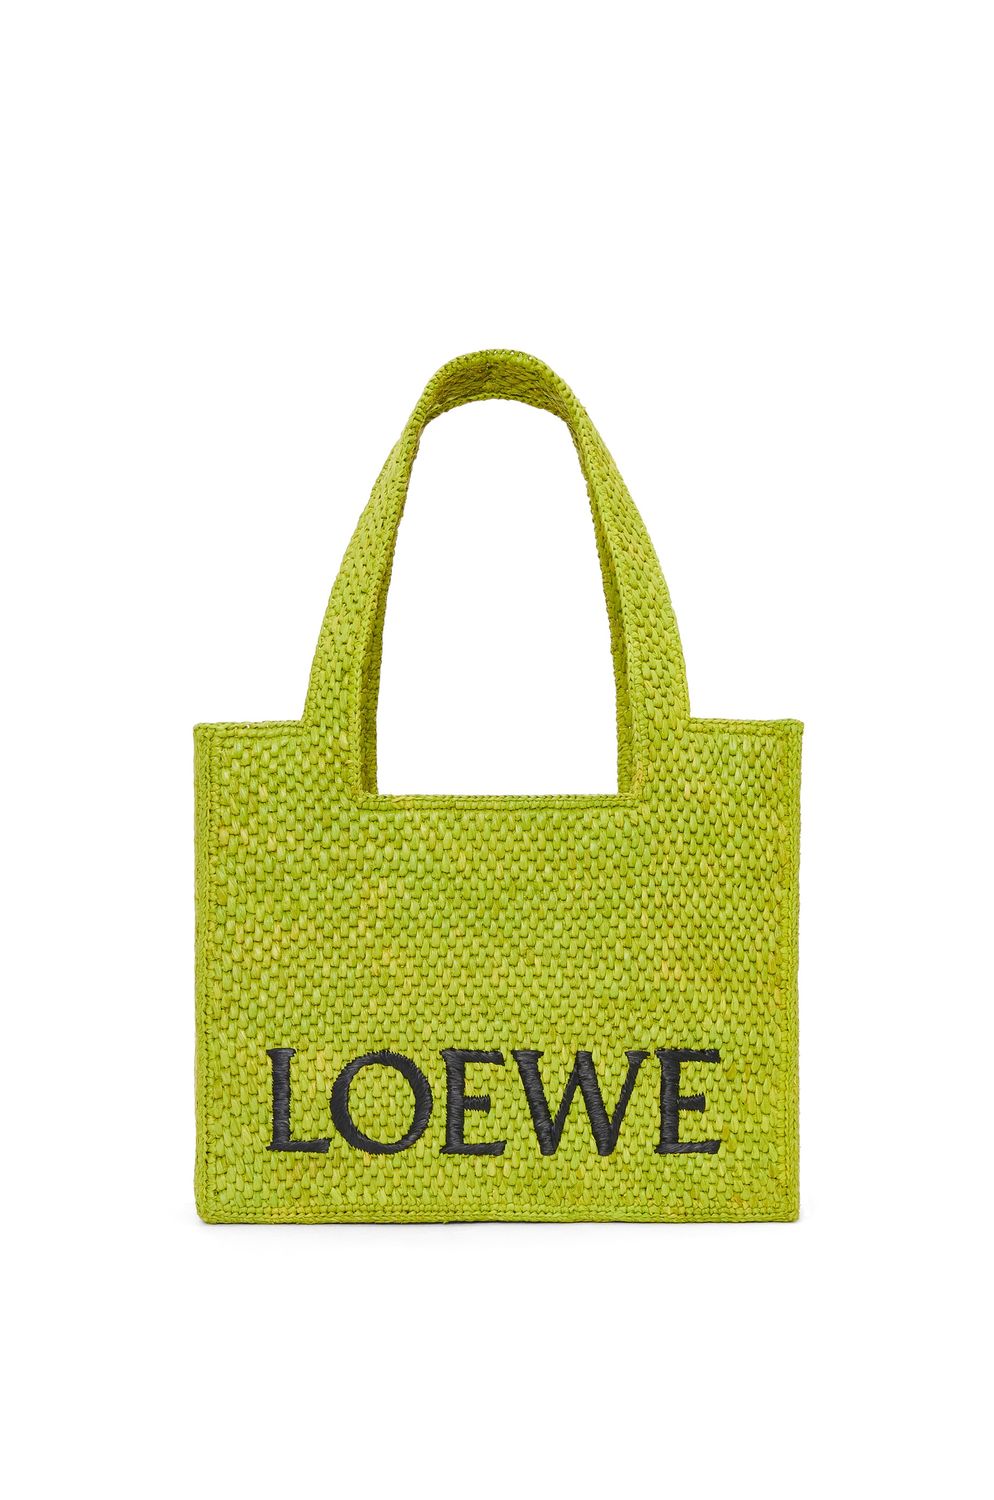 LOEWE Women’s Meadow Green Medium Tote Handbag - 72% Raphia, 20% Calfskin, 8% Viscose